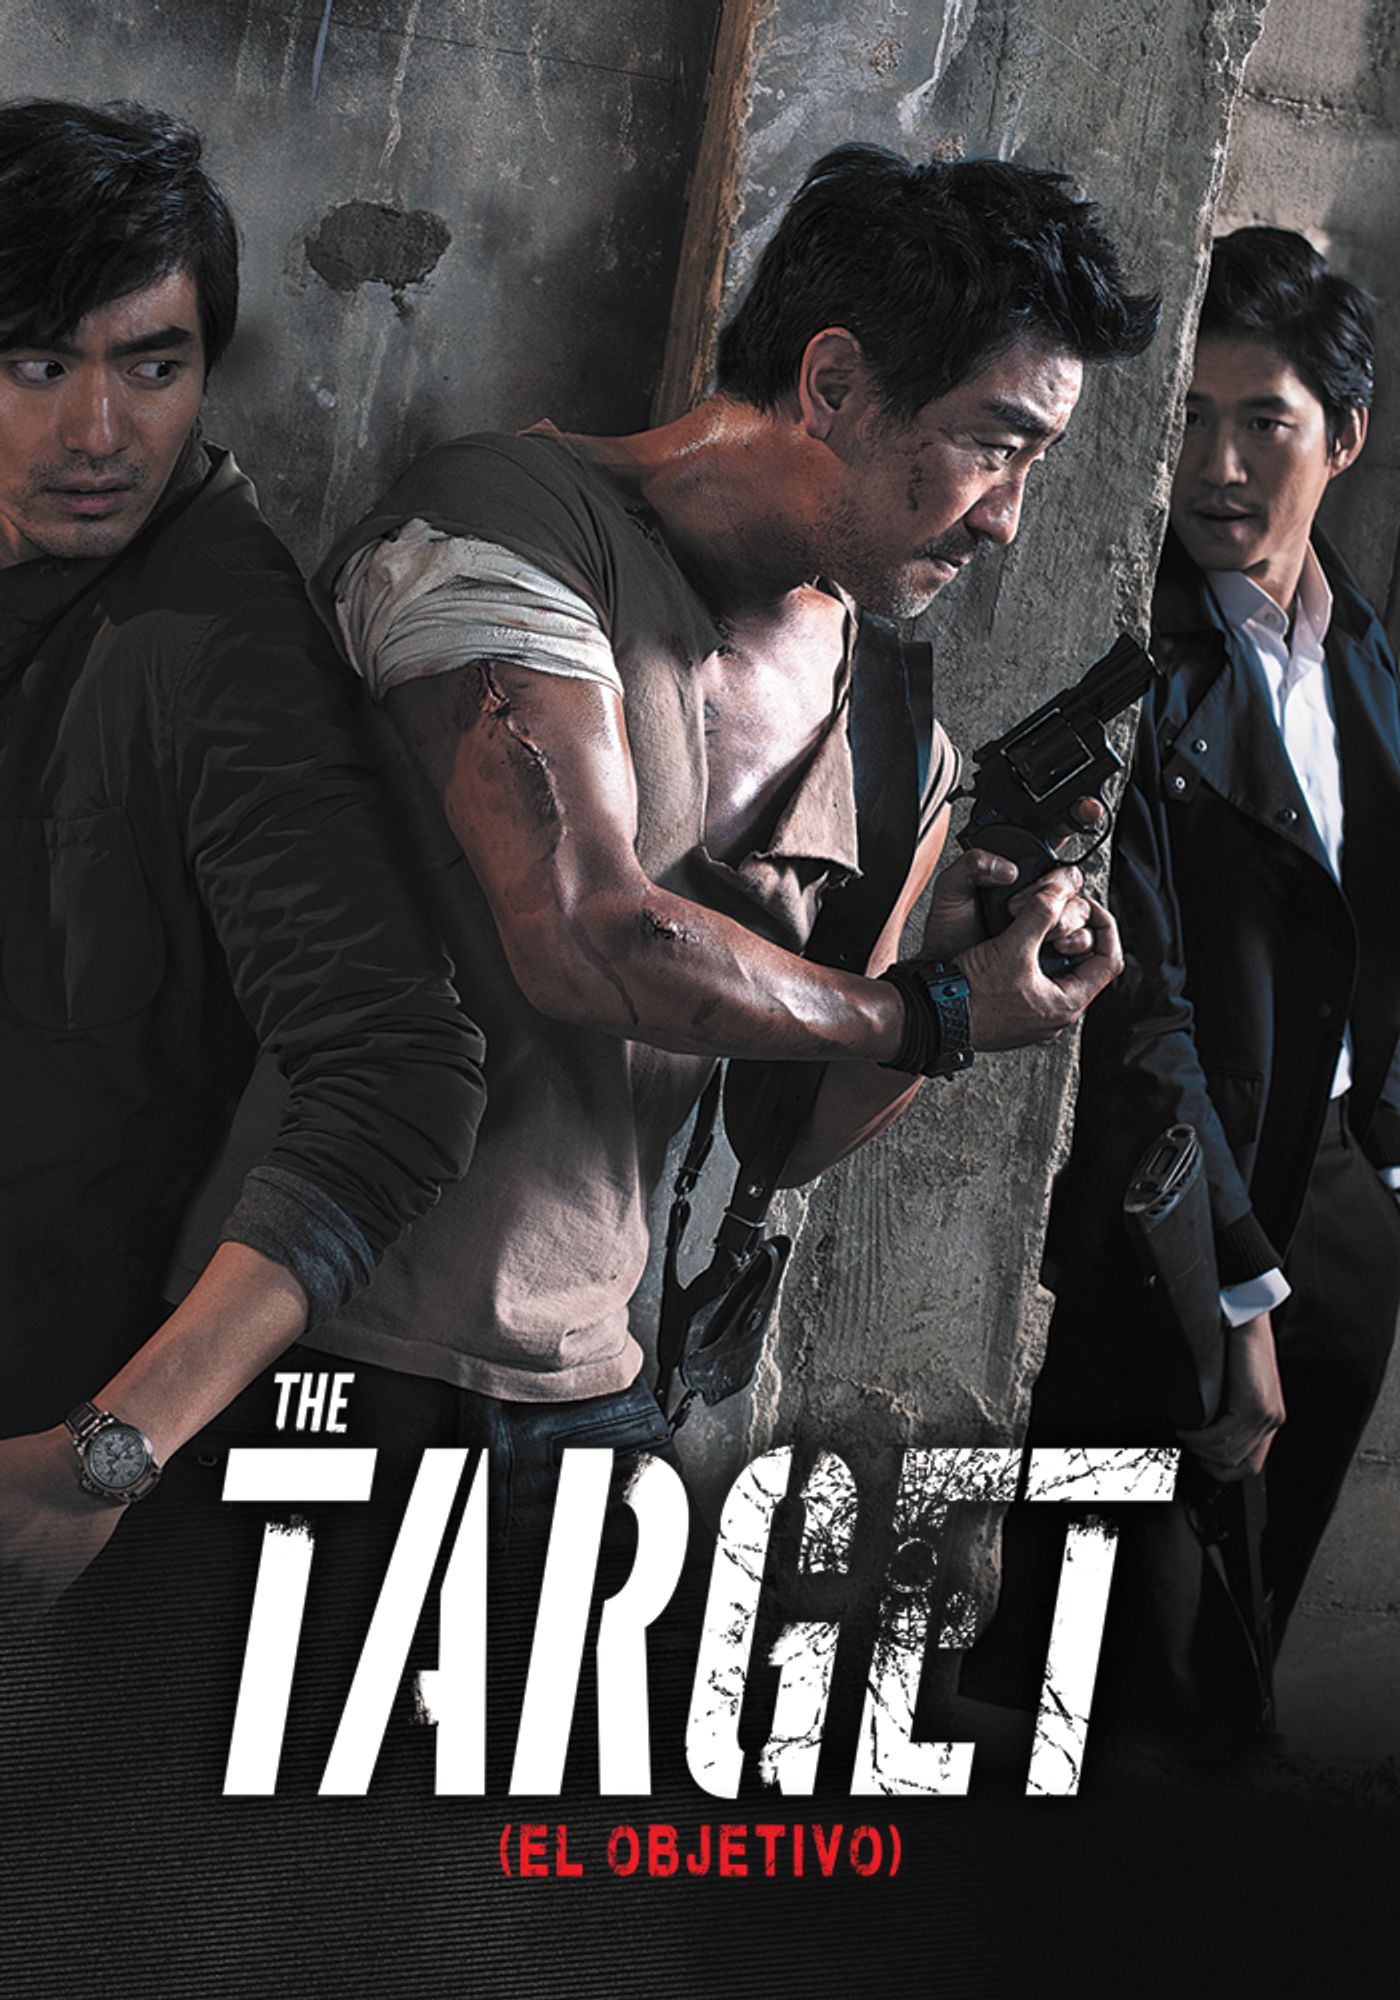 The target (El objetivo)